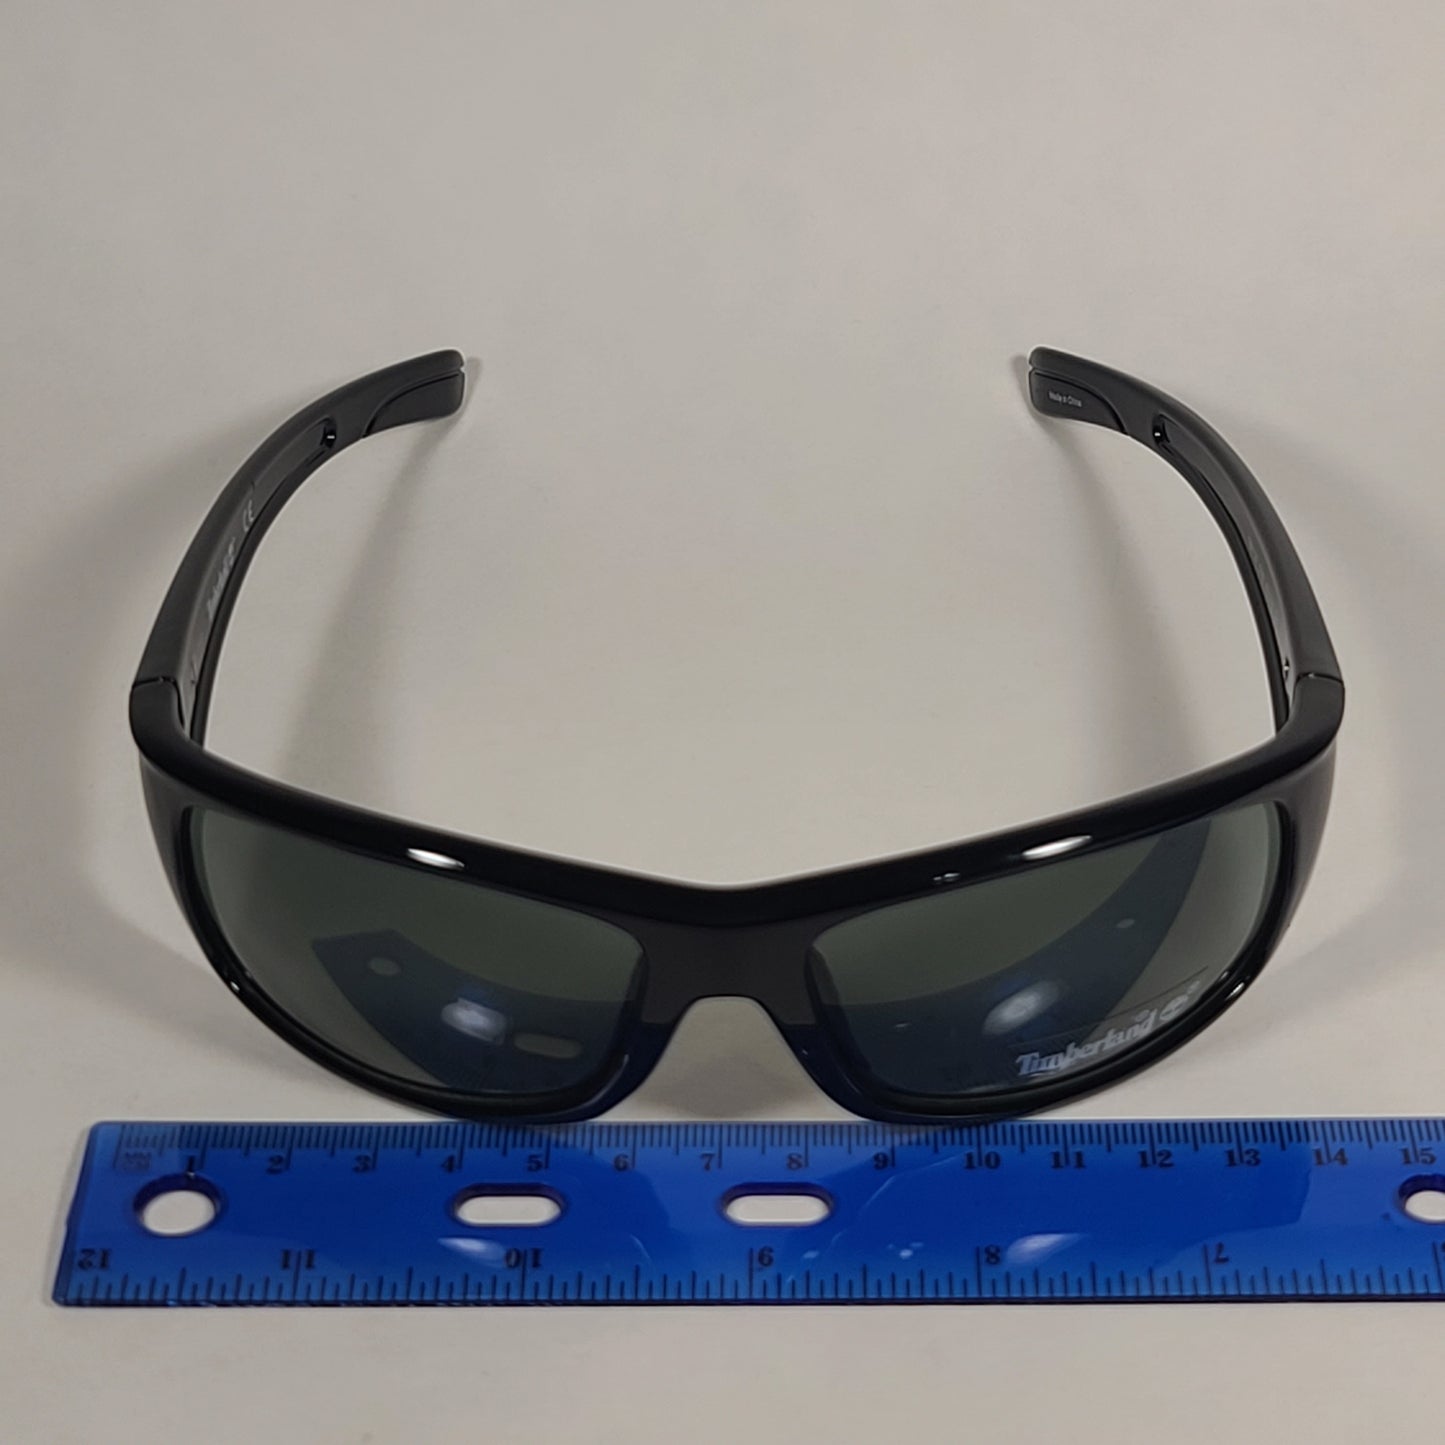 Timberland Wrap Sunglasses Shiny Black Frame Green Lens TB7127 01N - Sunglasses